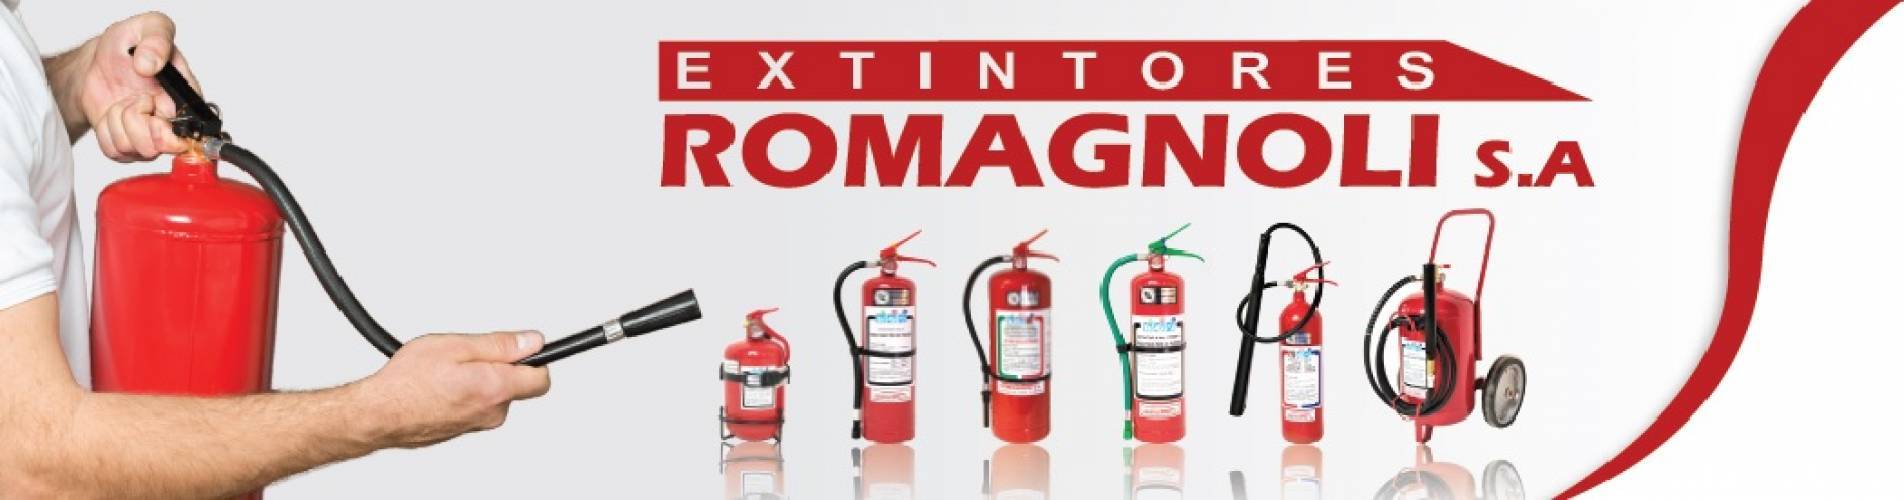 Extintores Romagnoli S.A